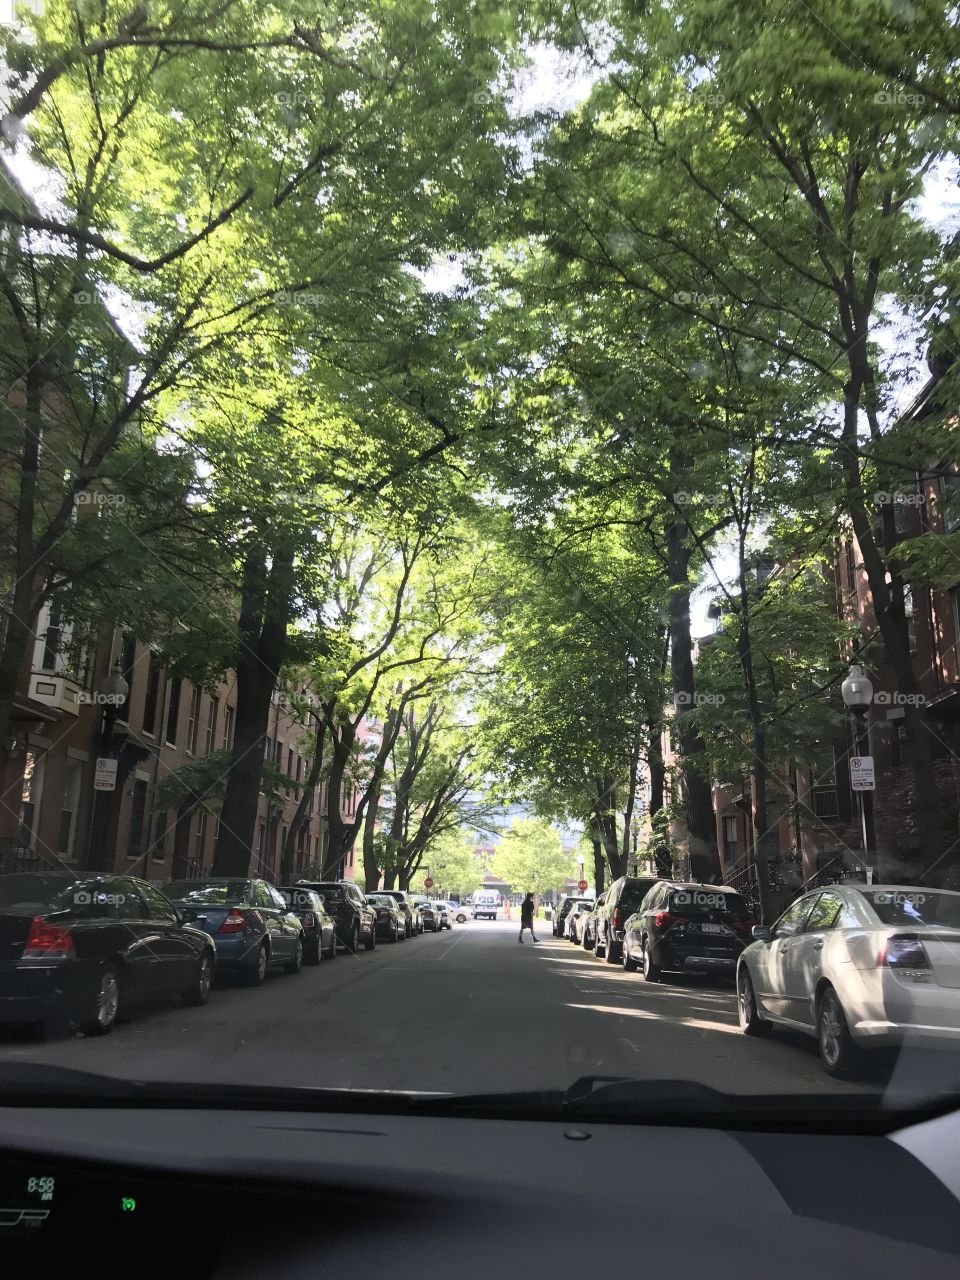 A residential street in Boston